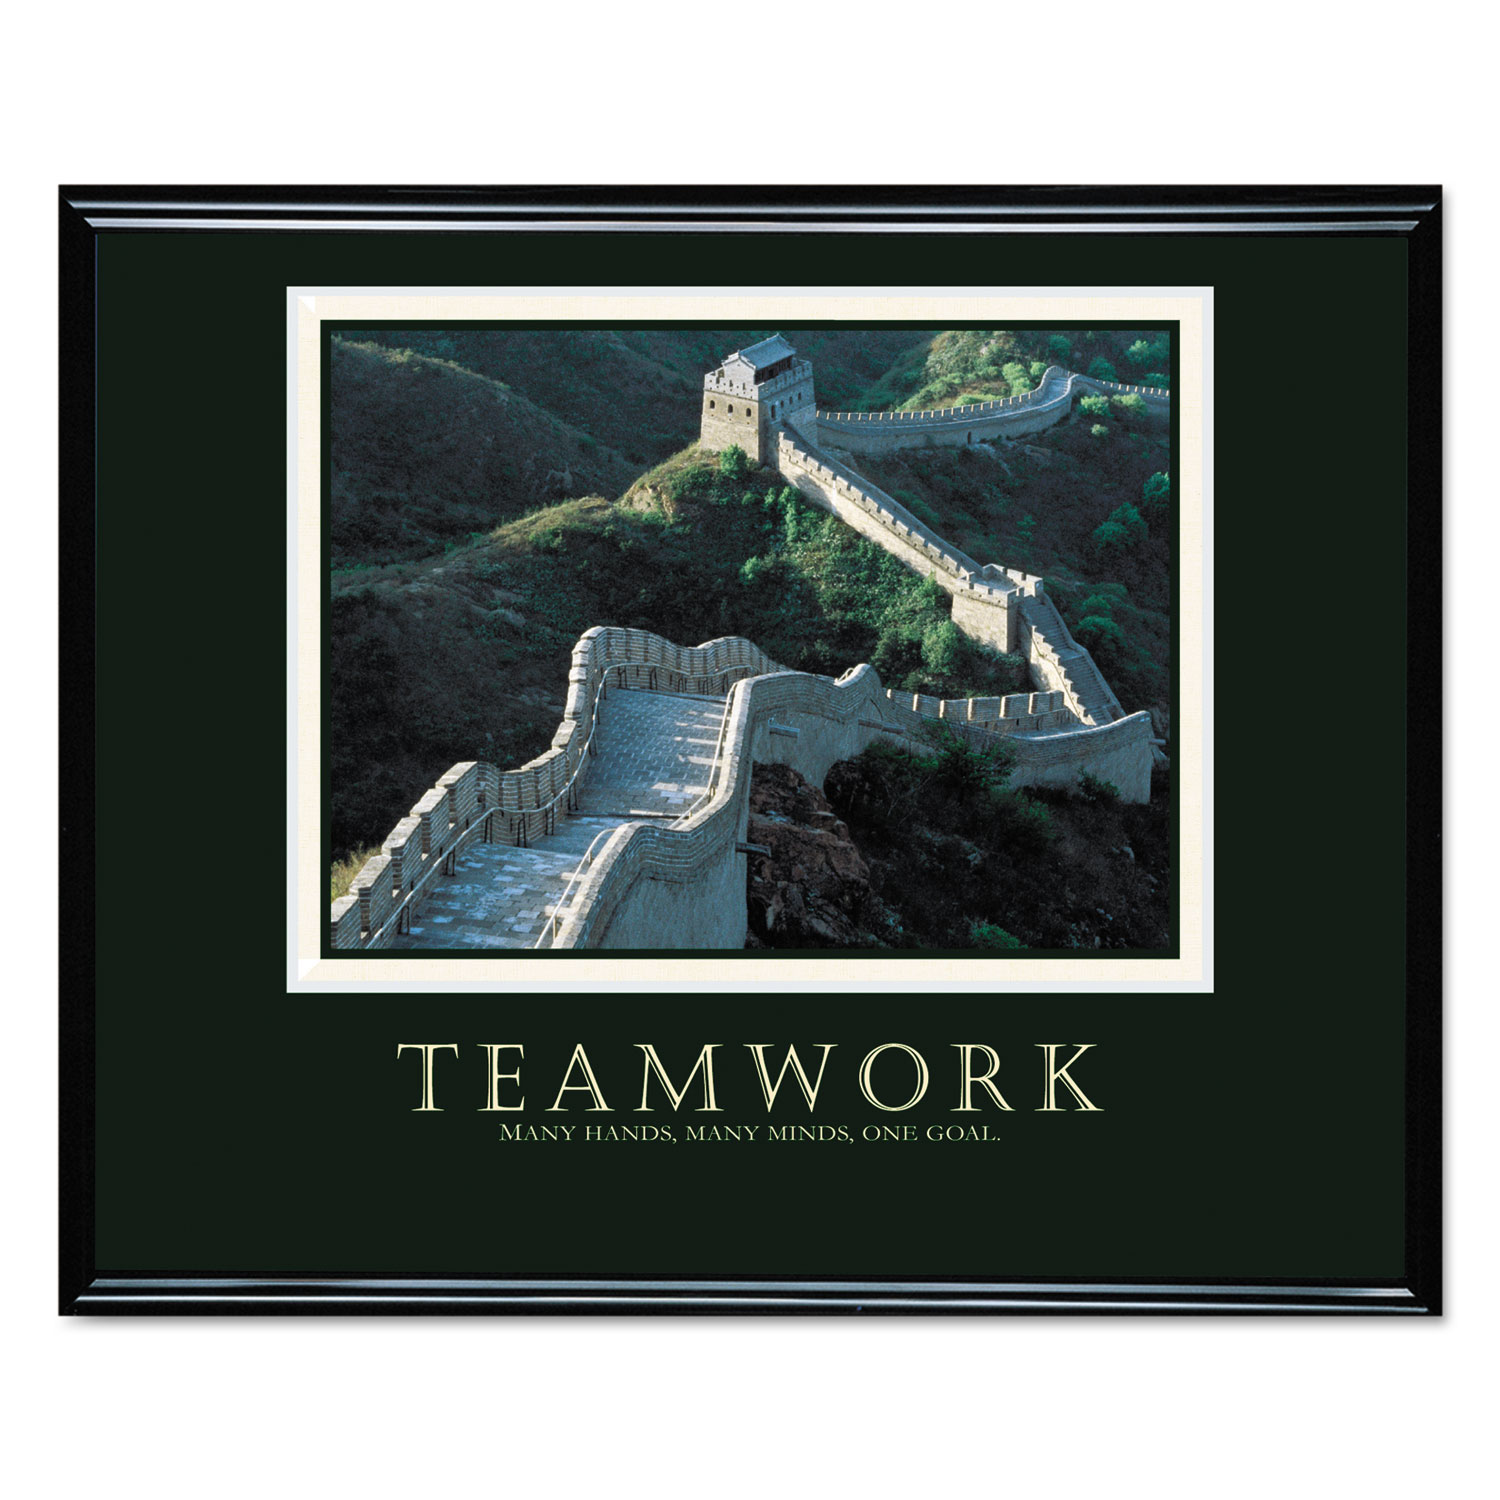 Teamwork (Great Wall Of China) Framed Motivational Print, 30 x 24